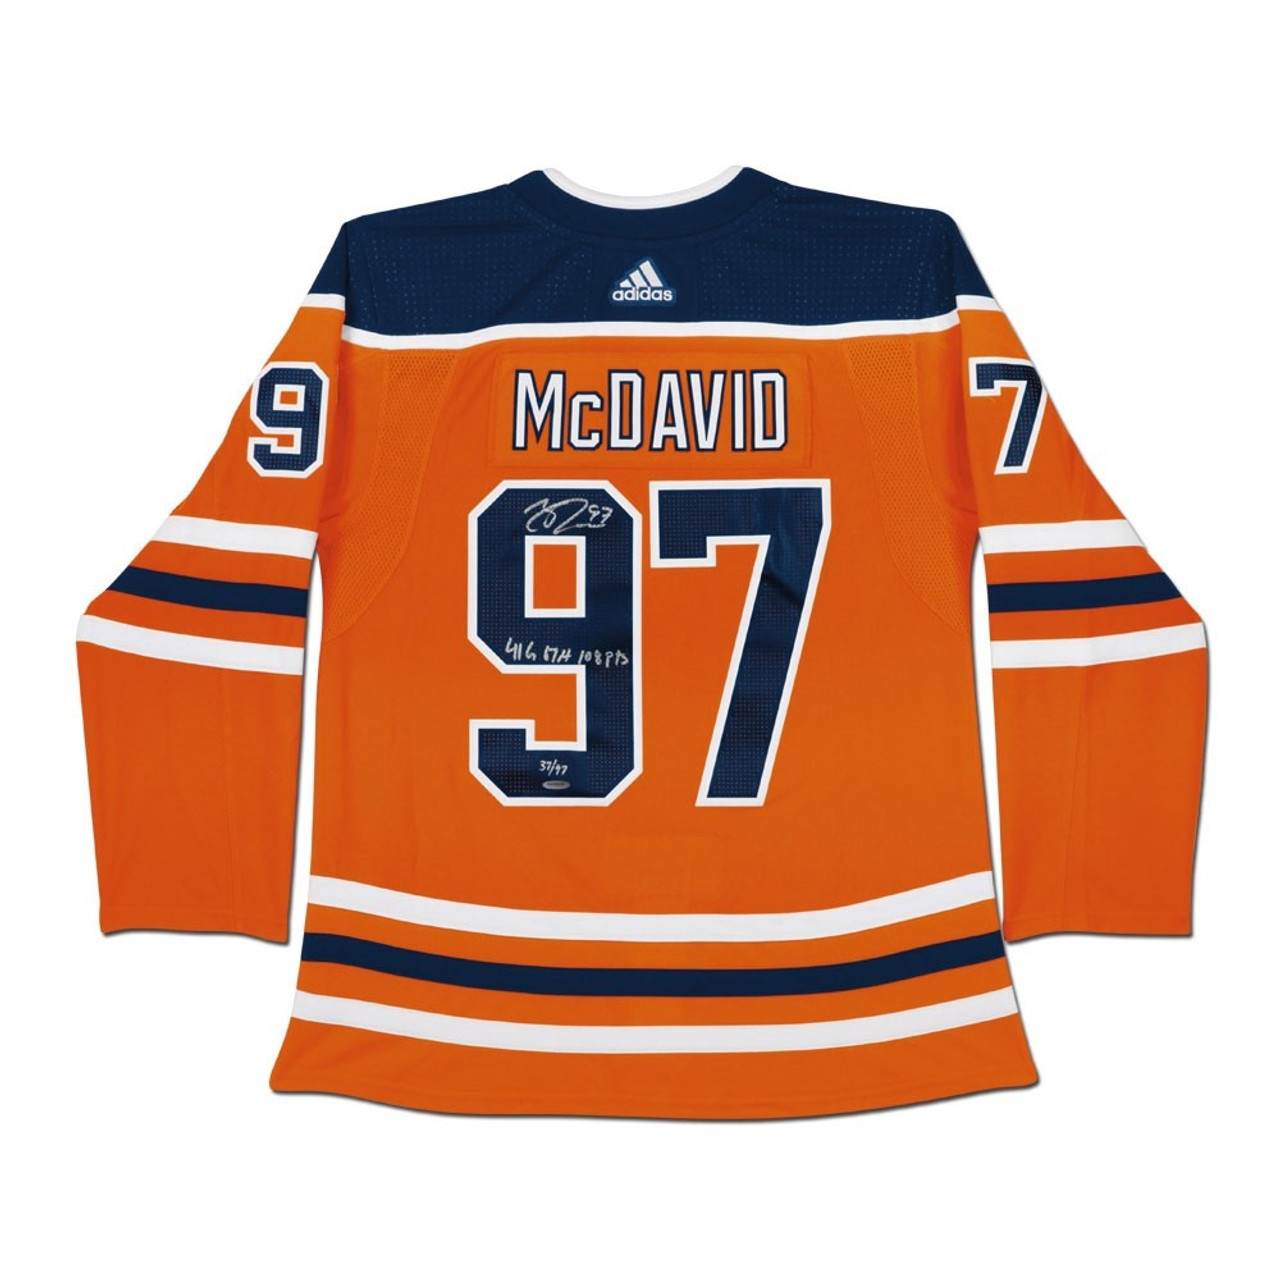 CONNOR McDAVID Edmonton Oilers Autographed / Inscribed 41 G, 67 A